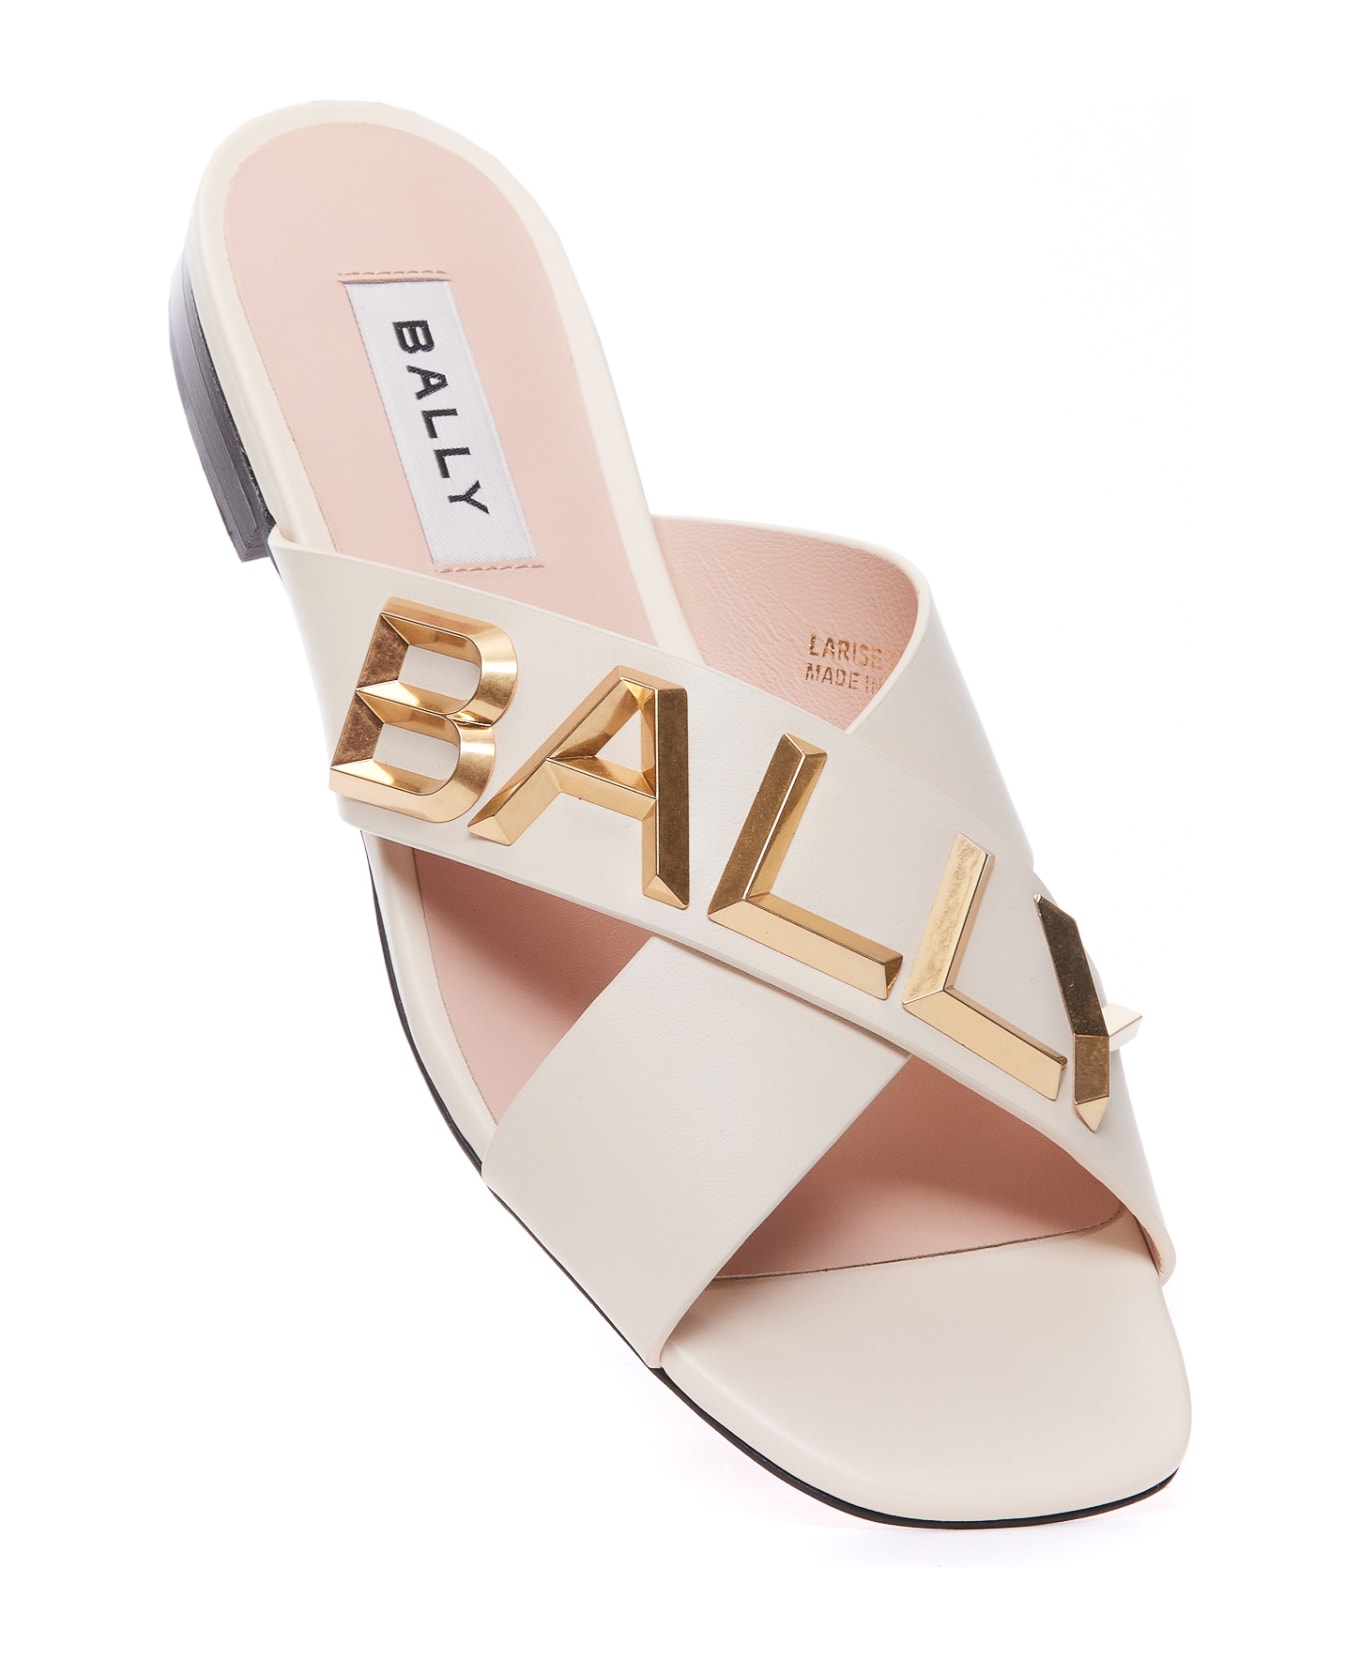 Bally Larise Flat Sandals - White